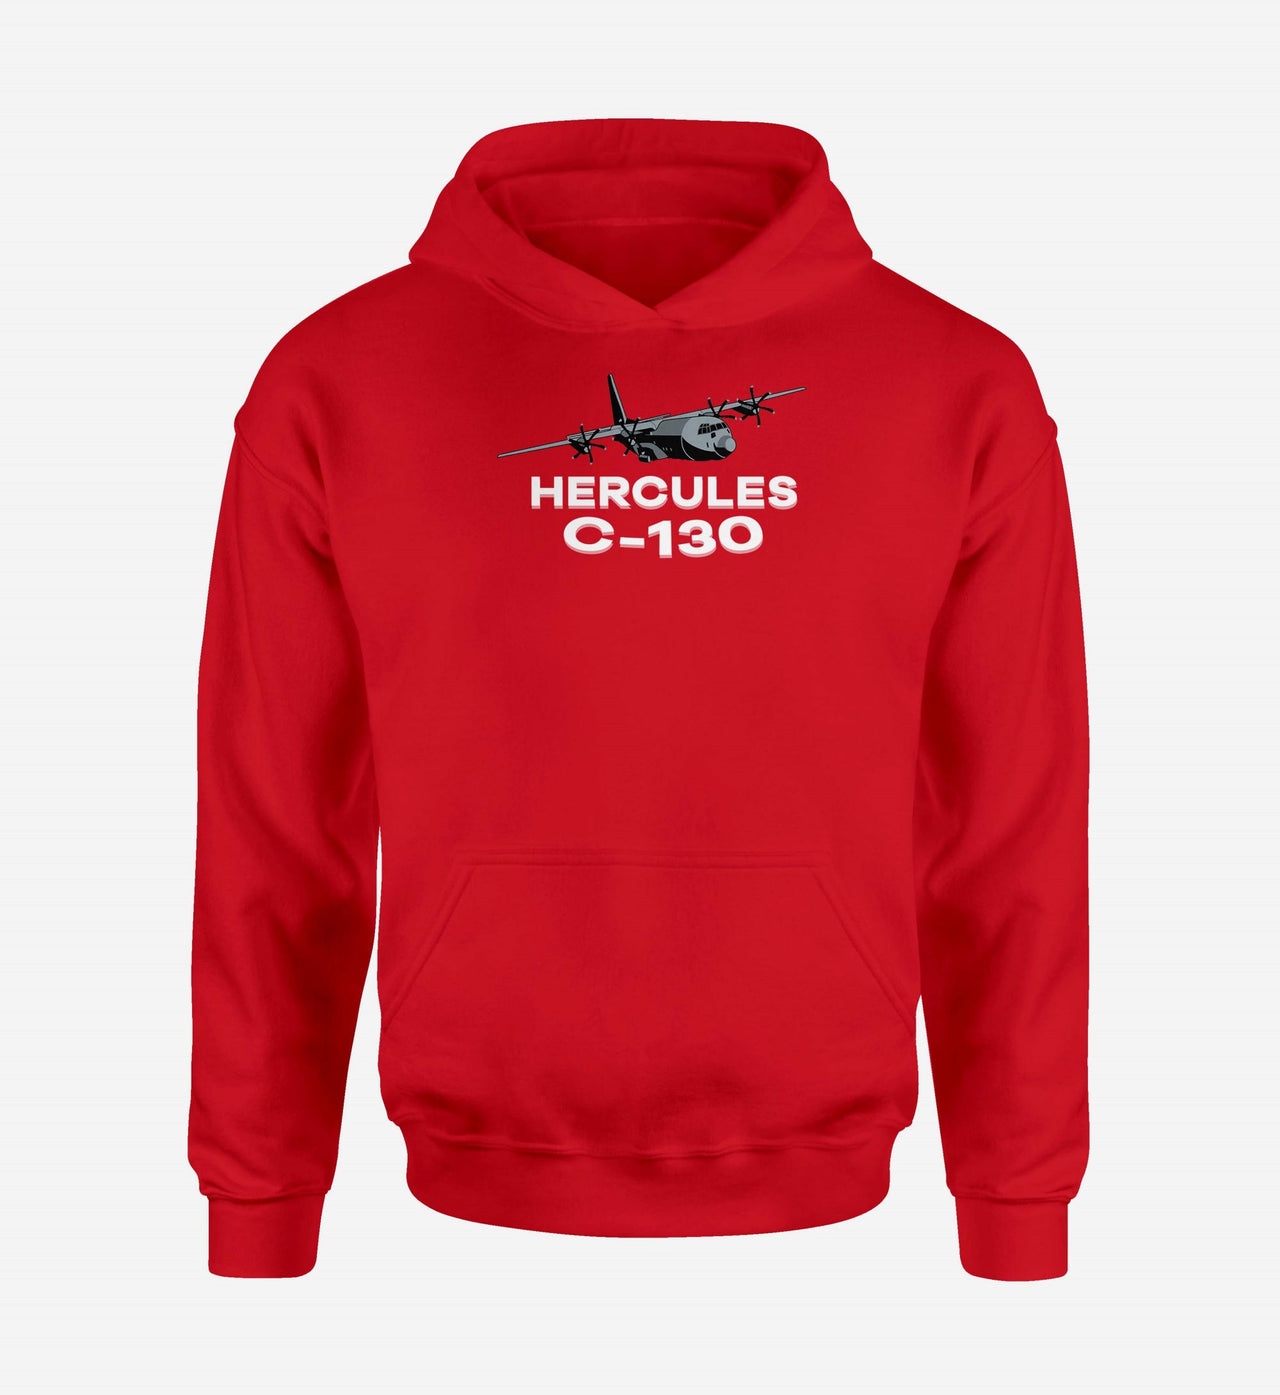 The Hercules C130 Designed Hoodies